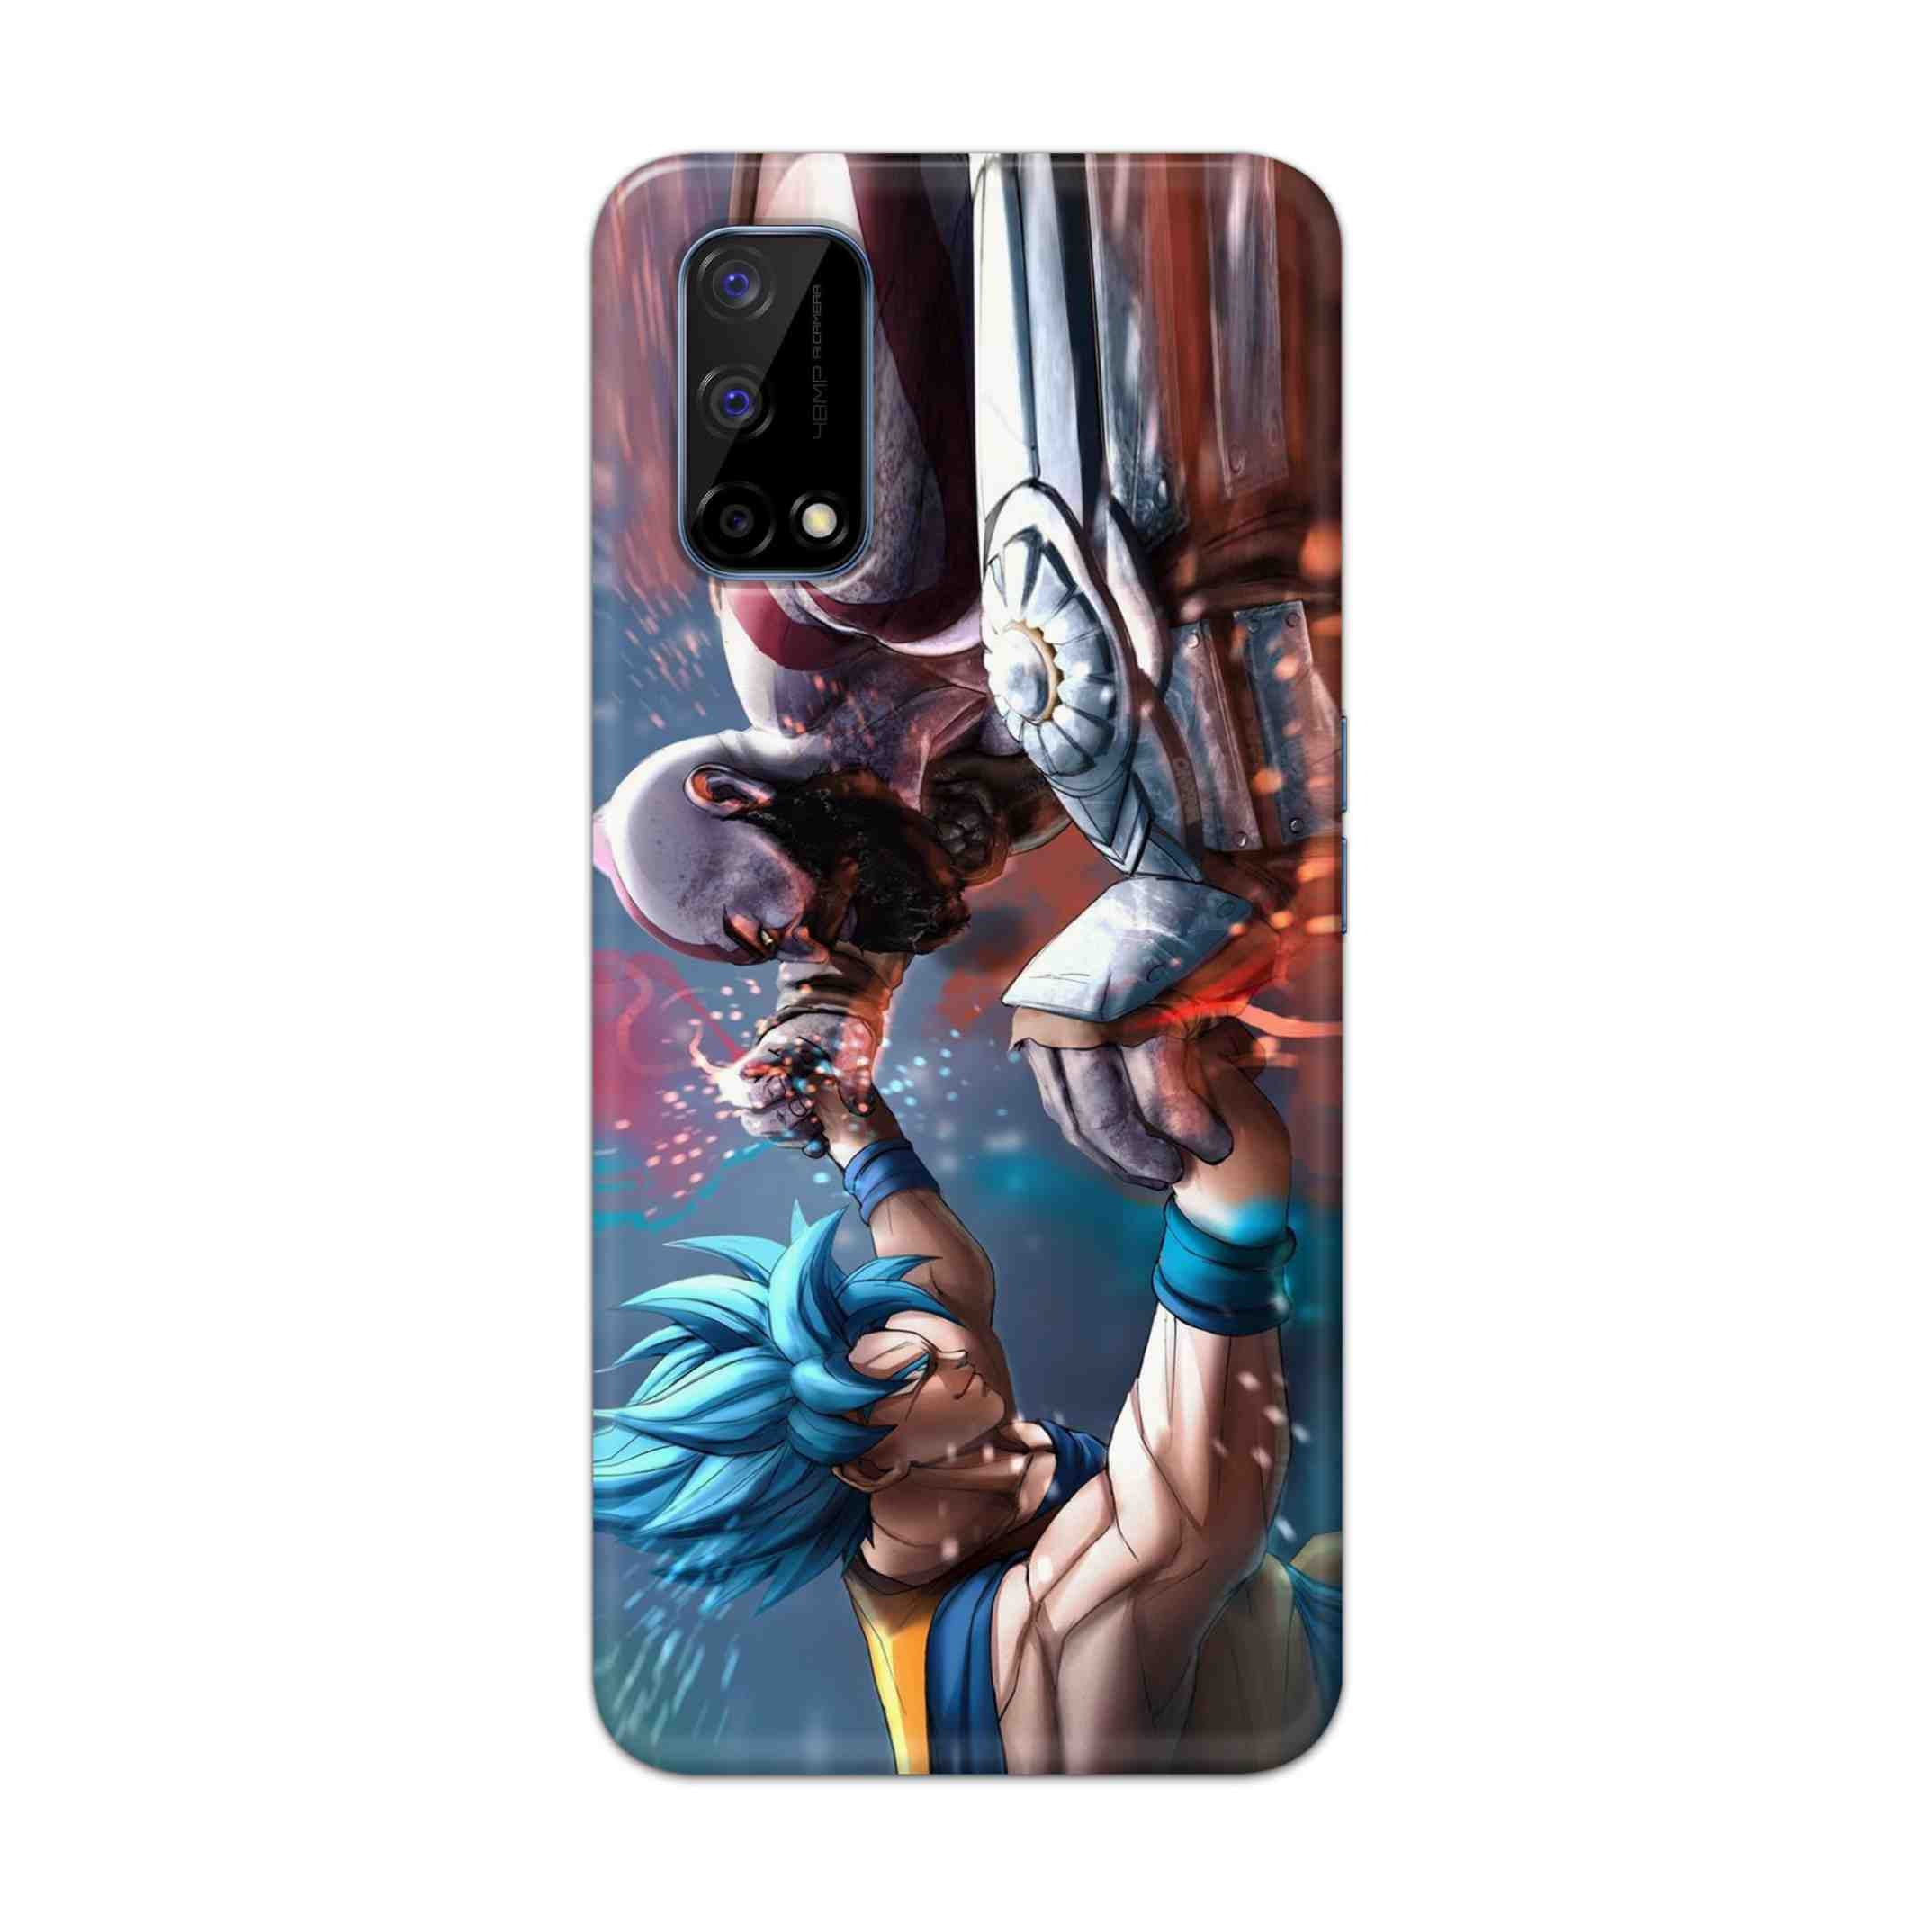 Buy Goku Vs Kratos Hard Back Mobile Phone Case Cover For Realme Narzo 30 Pro Online